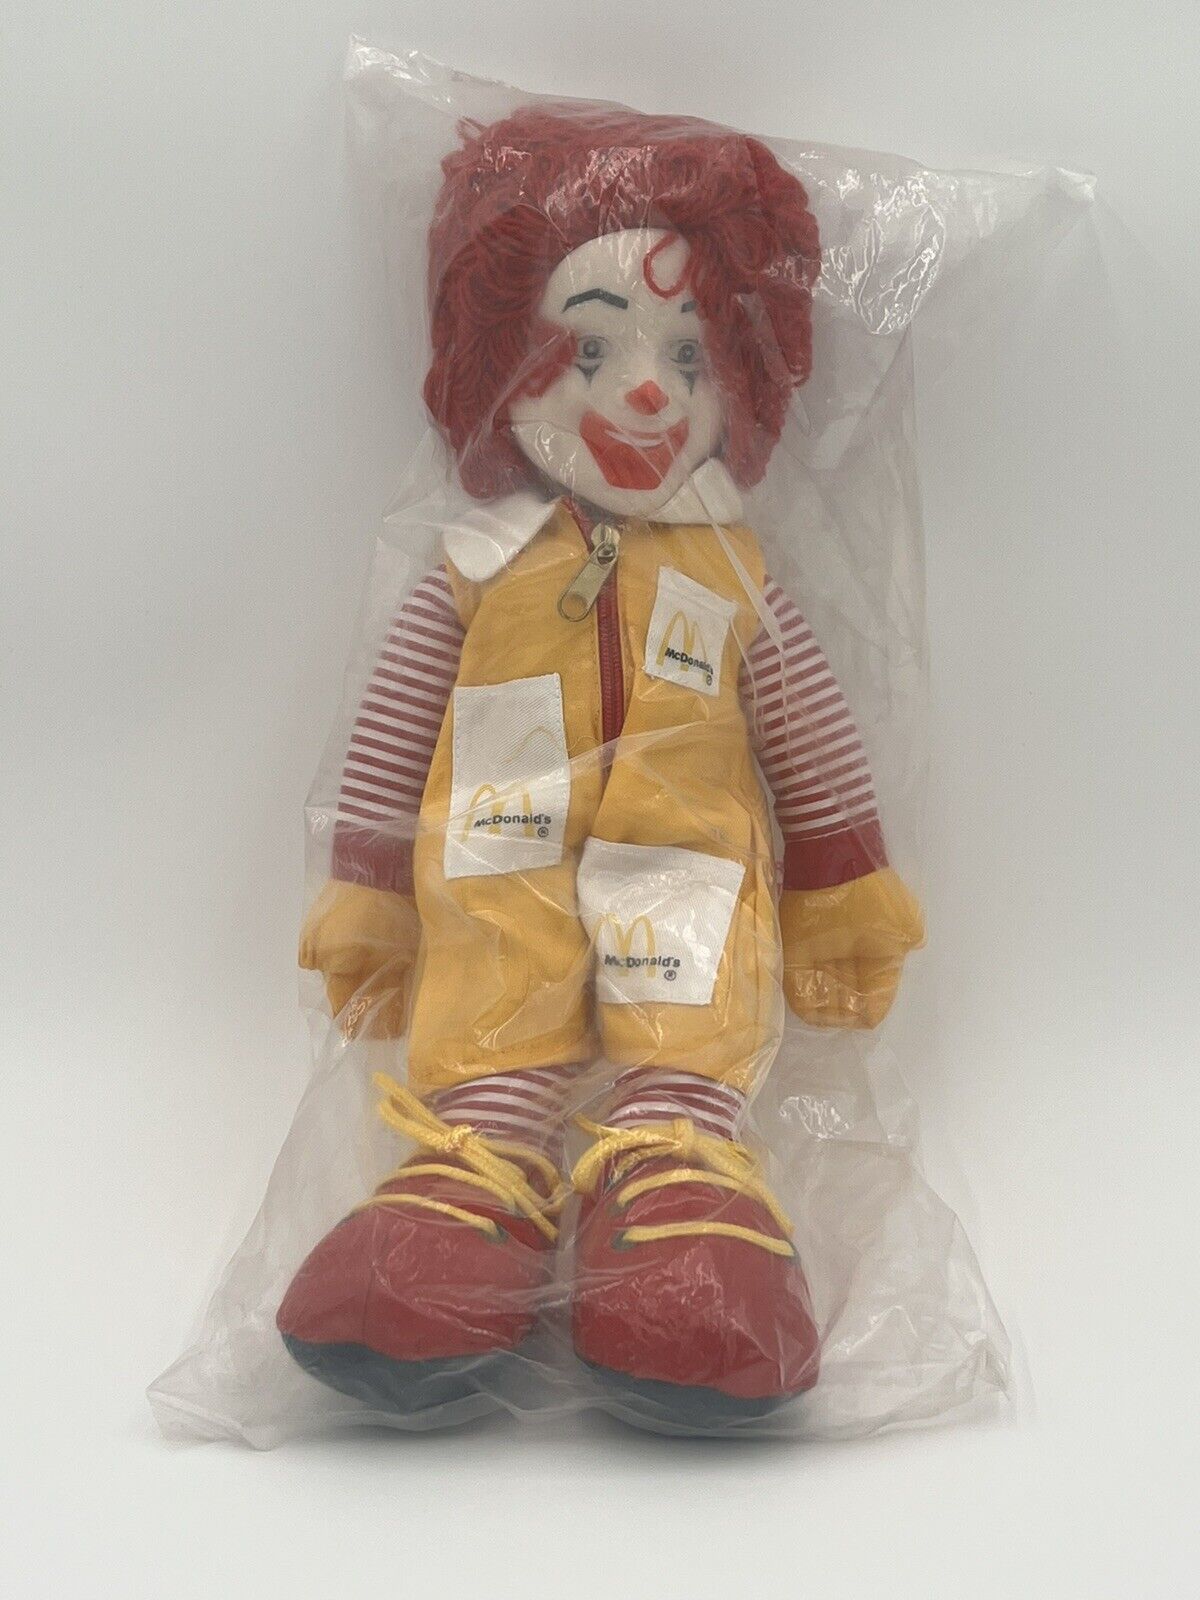 Vintage 1984 McDonald’s Ronald McDonald 15” Plush Toy Doll Vinyl Head (SEALED)